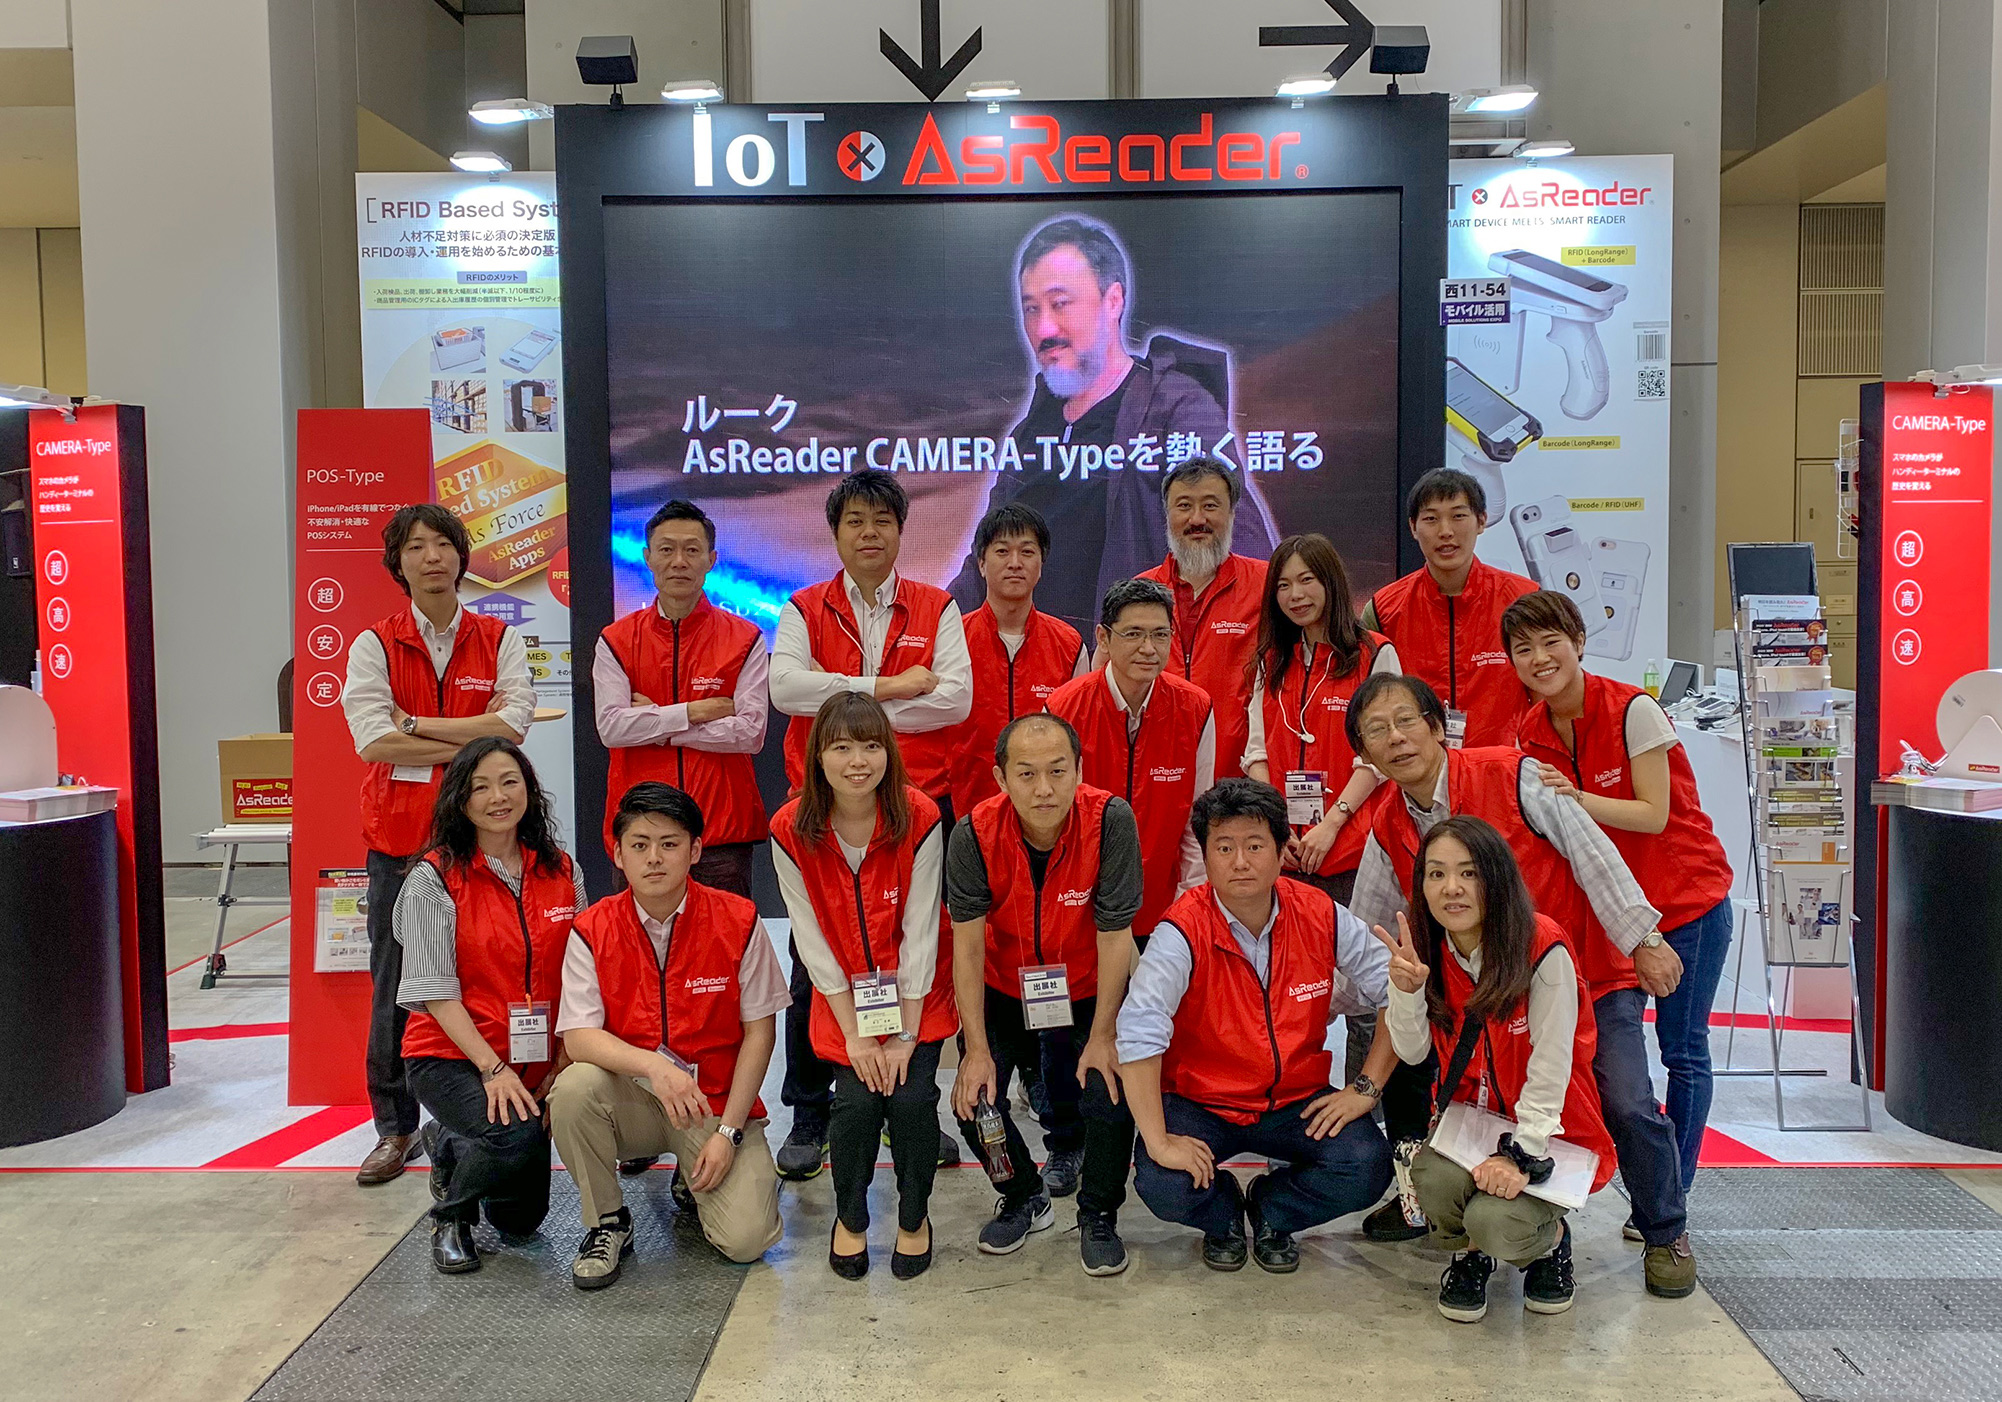 2019 Japan IT Week 春 後期「第9回モバイル活用展」、 AsReaderブースへの3,000名を超えるご来訪に感謝です！